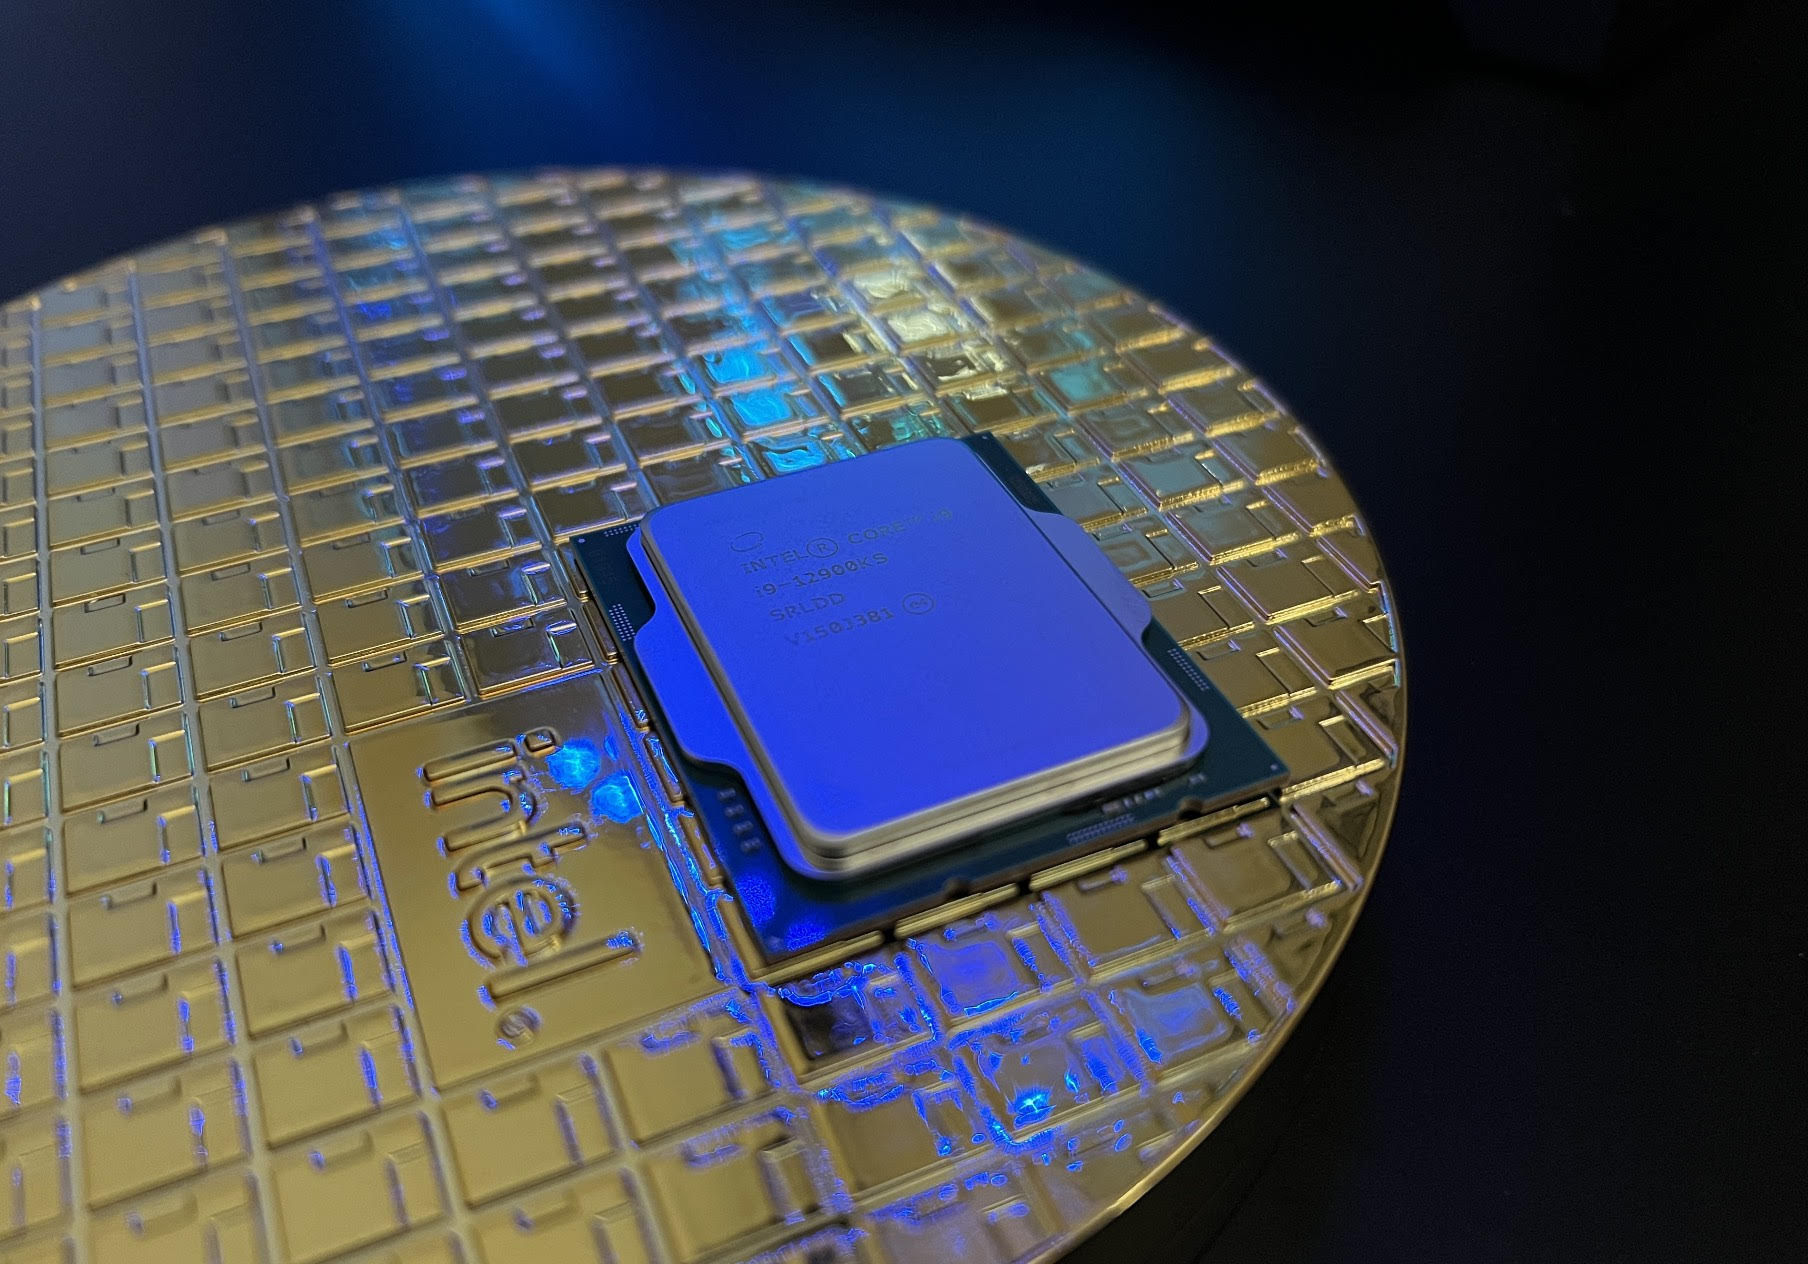 Processeur Intel Core i9-12900KS Alder Lake-S (3,9Ghz) à prix bas